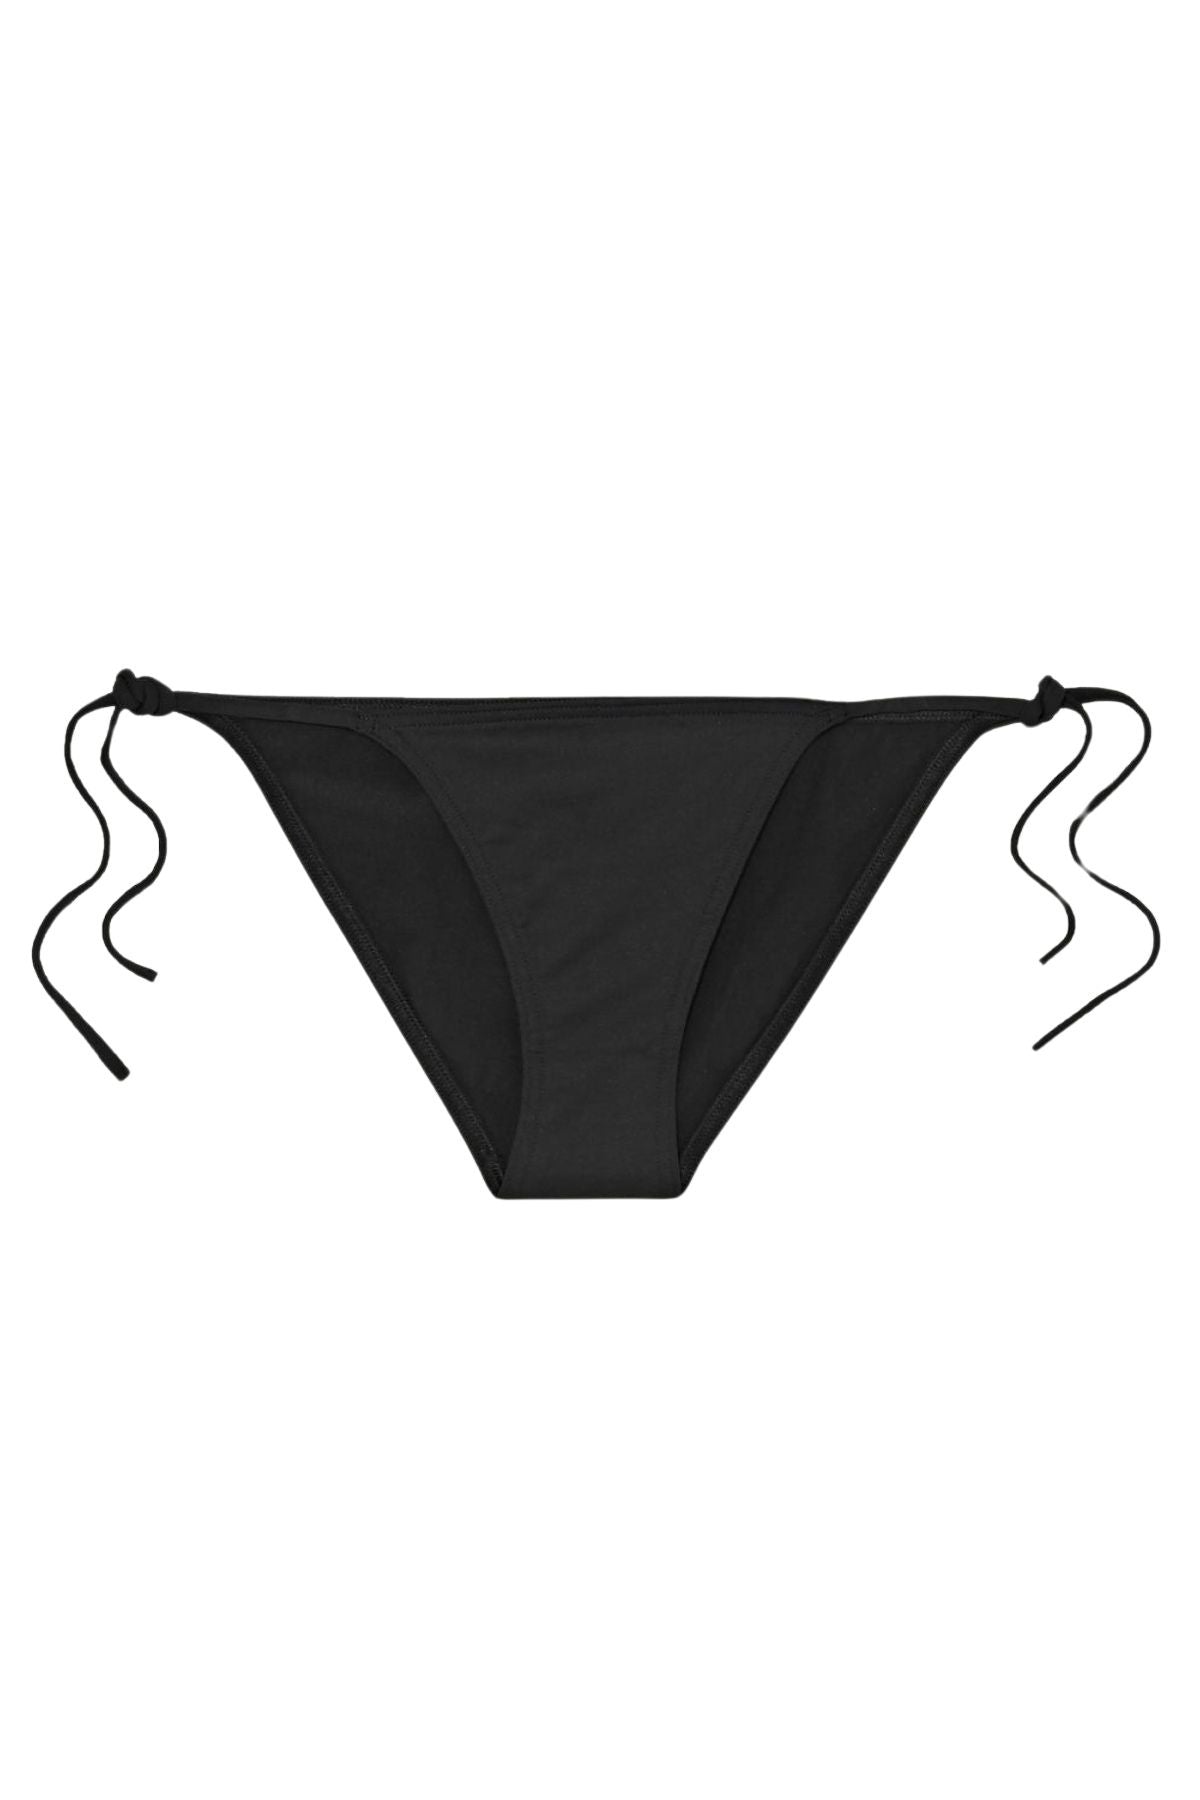 Eres Malou Side Tie Bikini Bottom - Ultra Black